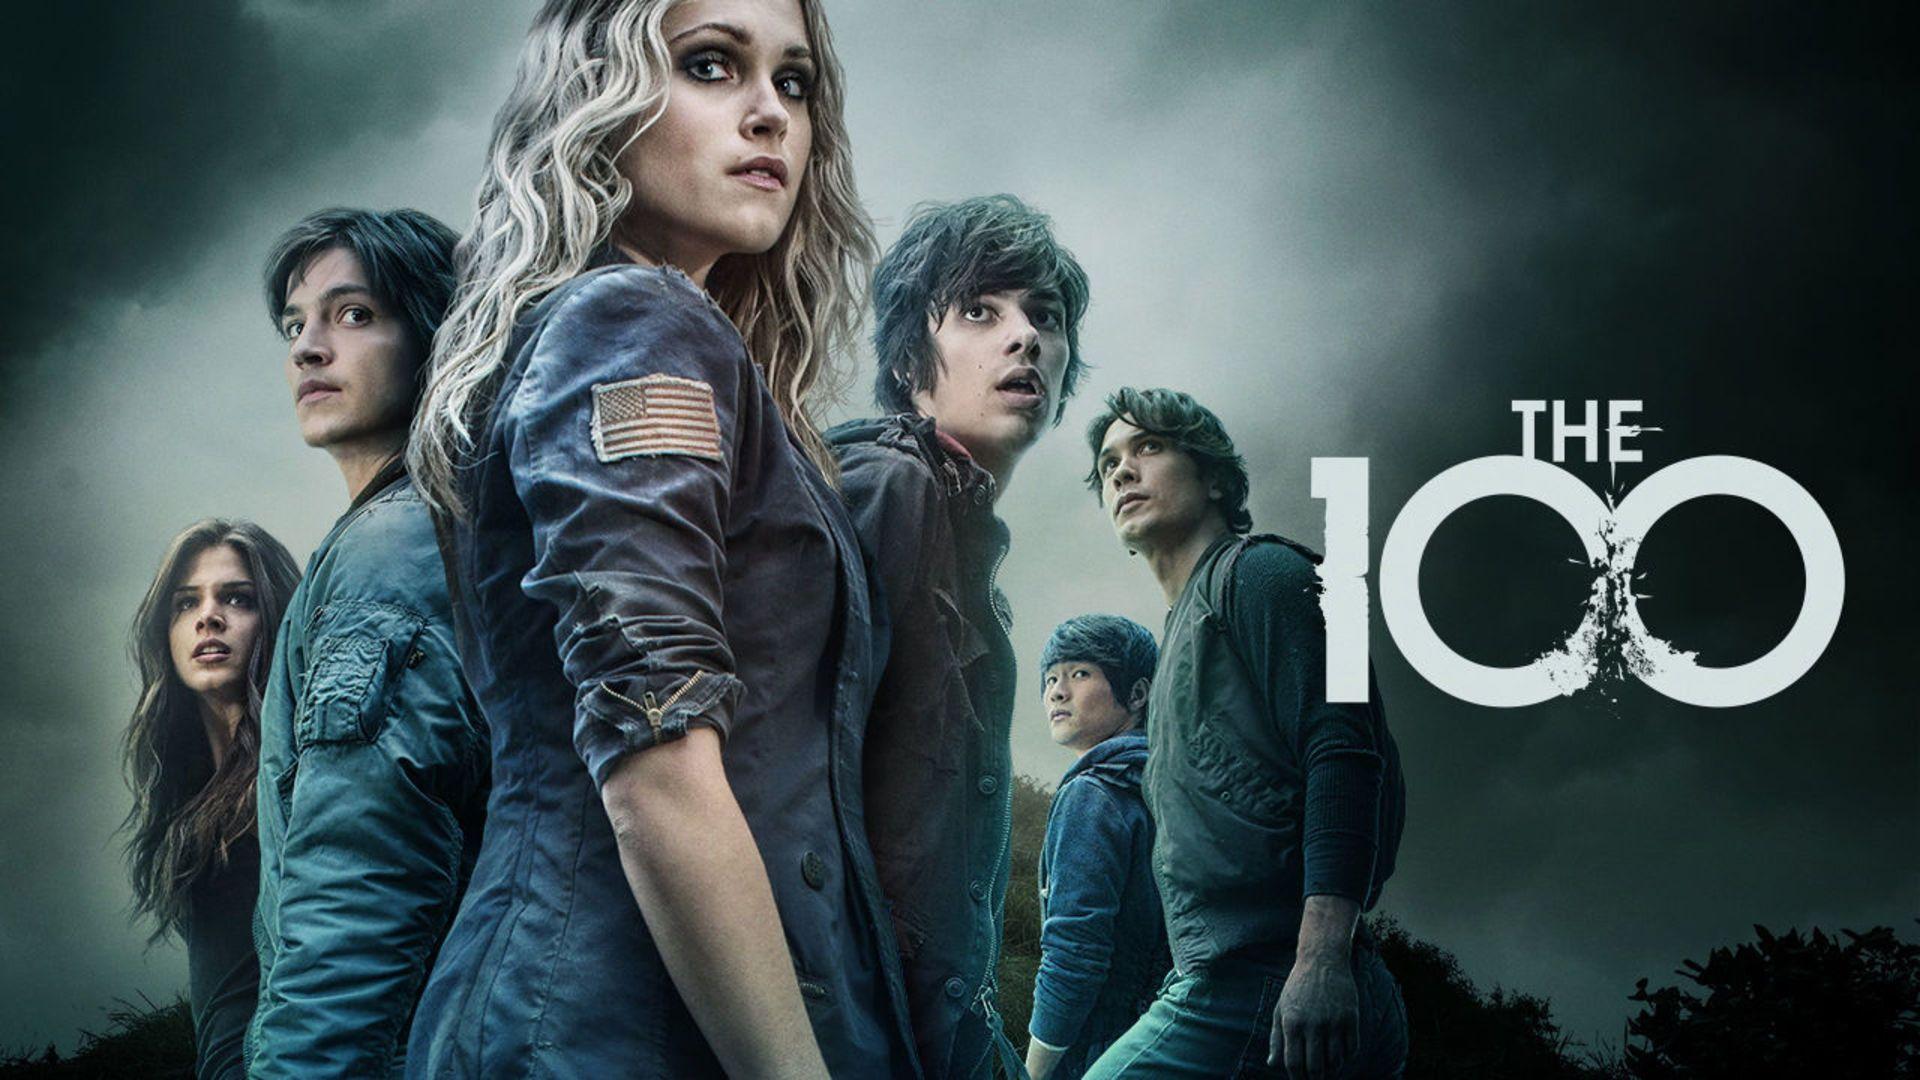 The CW Renews The 100 for Season 6 Watch U.S